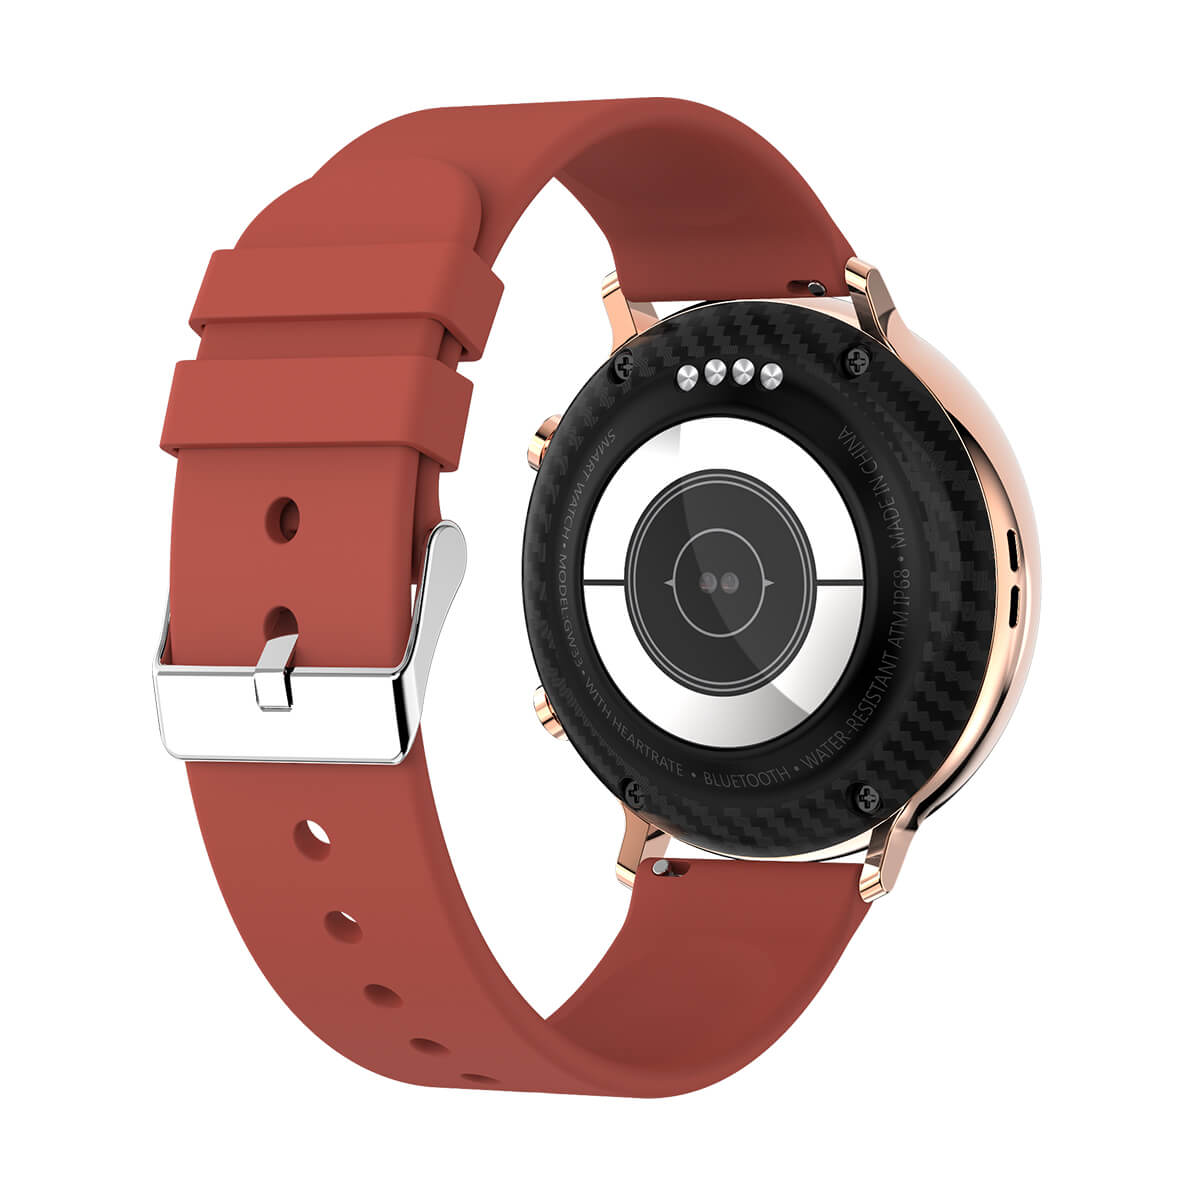 Ceas smartwatch 1.3 inch IPS Full Touch raspunsrefuz apel pasi ritm cardiac EKG oxigen notificari aplicatii apel bluetooth sporturi multiple rezistenta apa IP68 model GW33 12